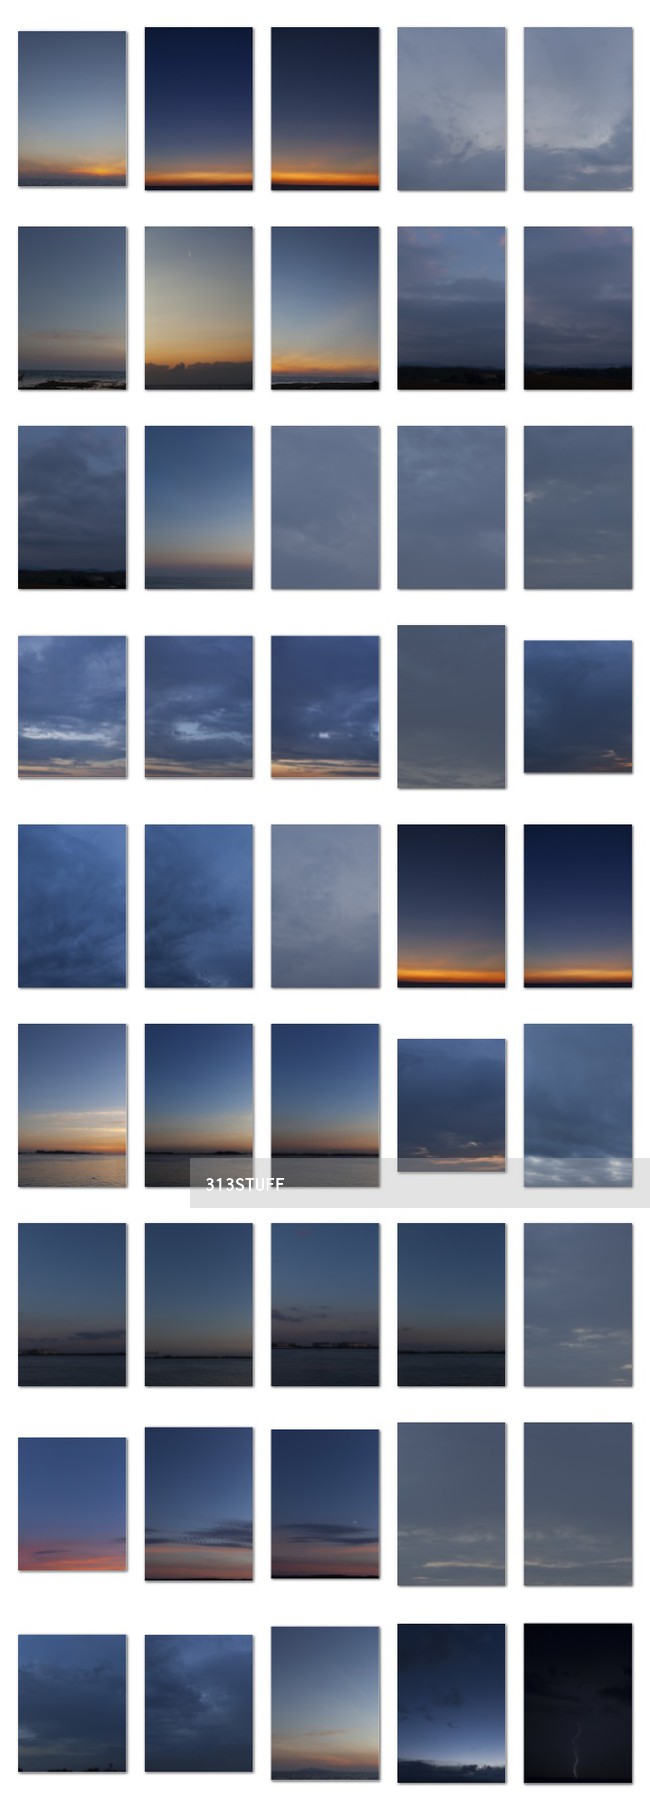 140 photos of blue hour skies